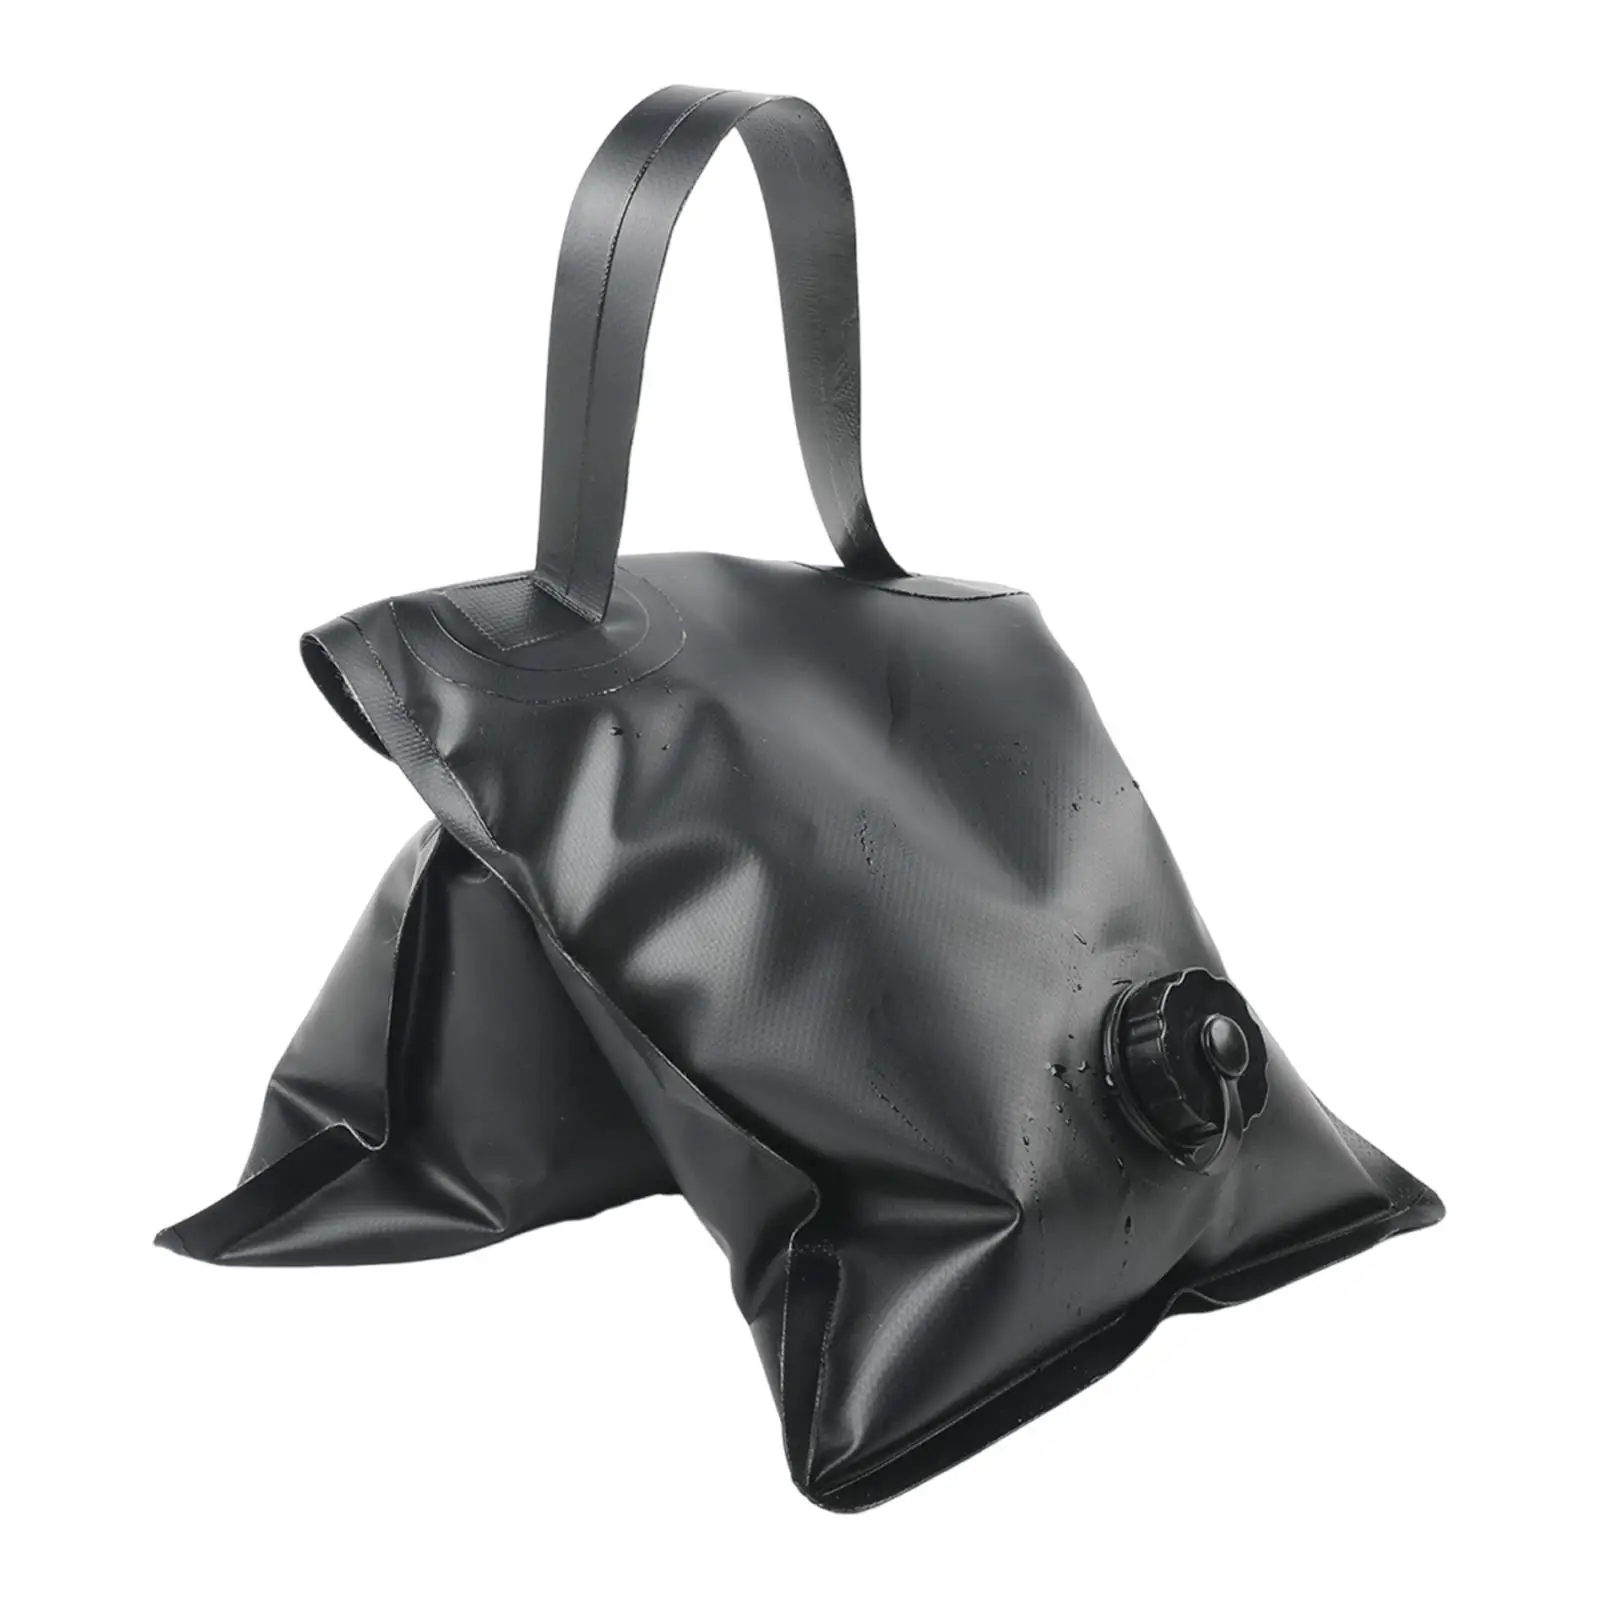 Canopy Water Weight Bag Weight Sand Bag Leg Canopy Weight Bag Foldable Sandbag